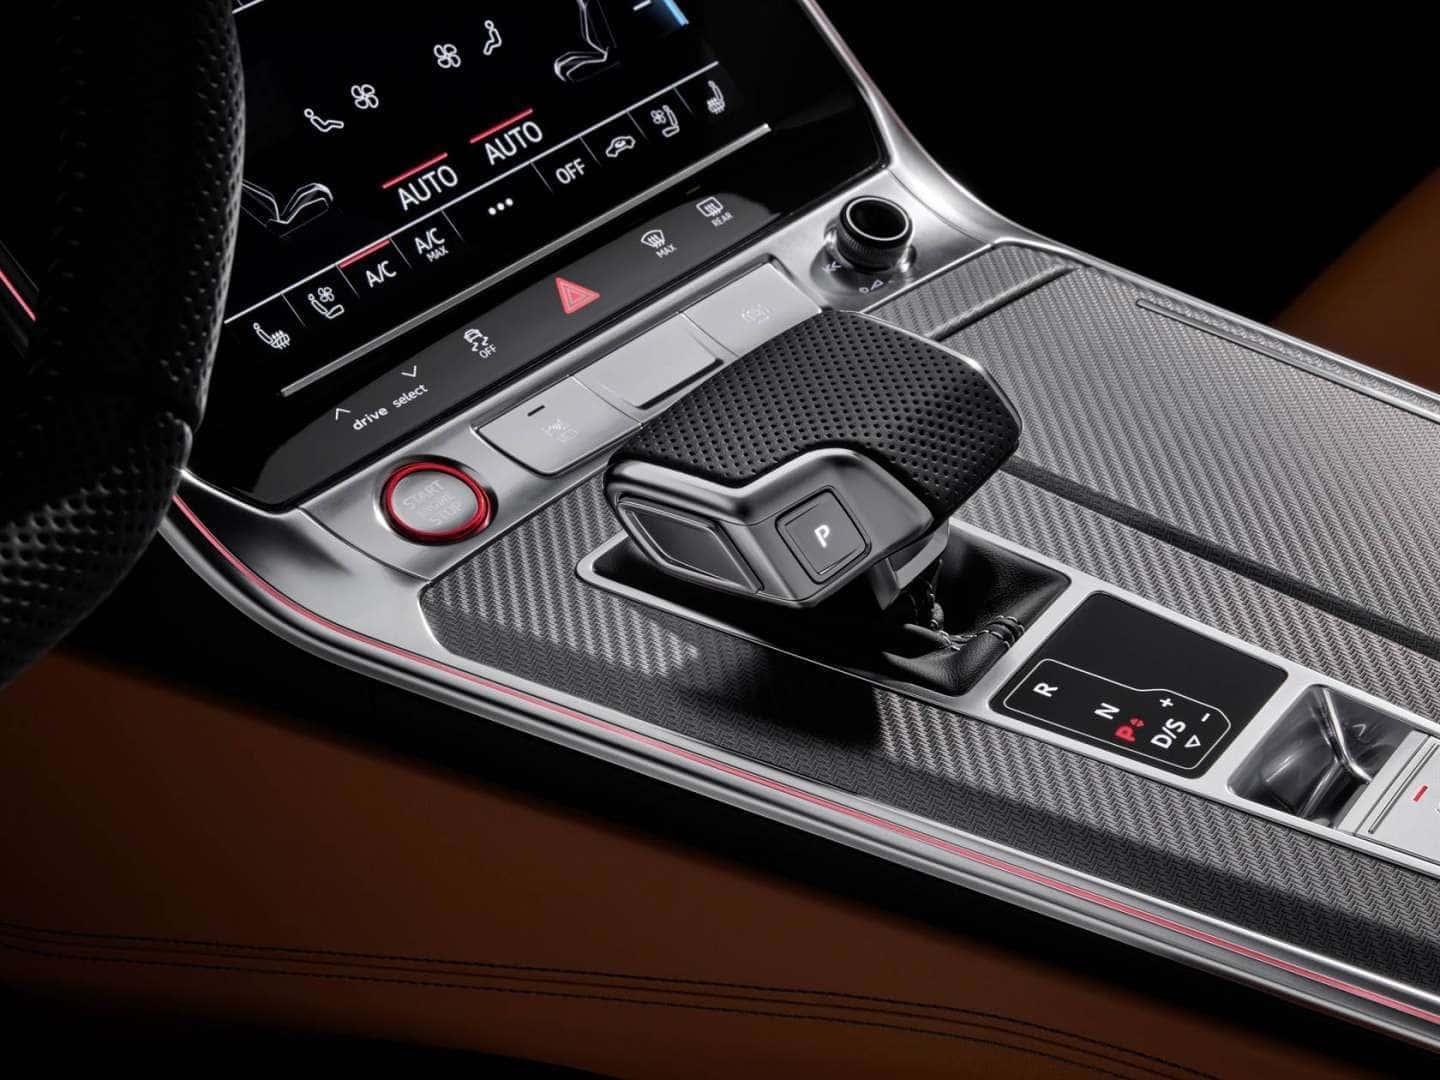 Alcantara Trim Has Transformed The Cabin Of This Audi RS6 Avant